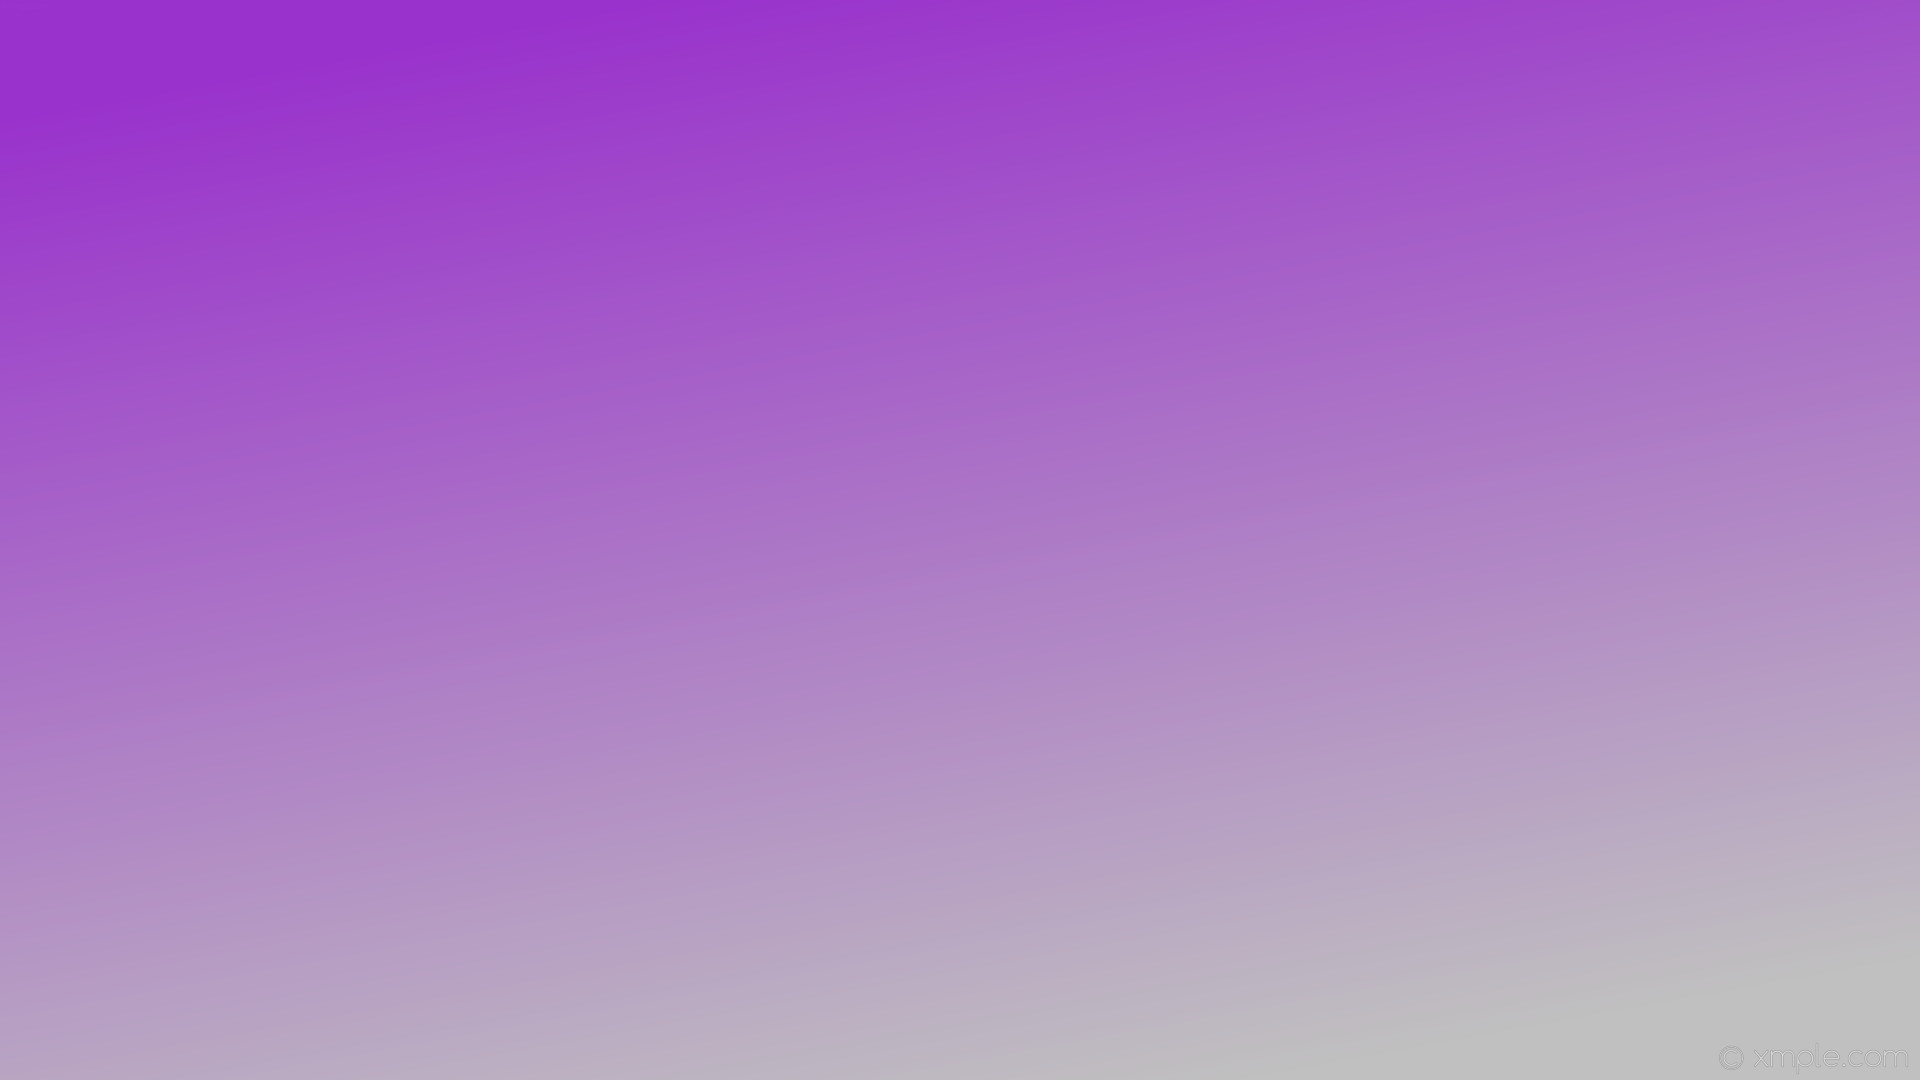 1920x1080 wallpaper gradient linear purple grey silver dark orchid #c0c0c0 #9932cc  300Â°